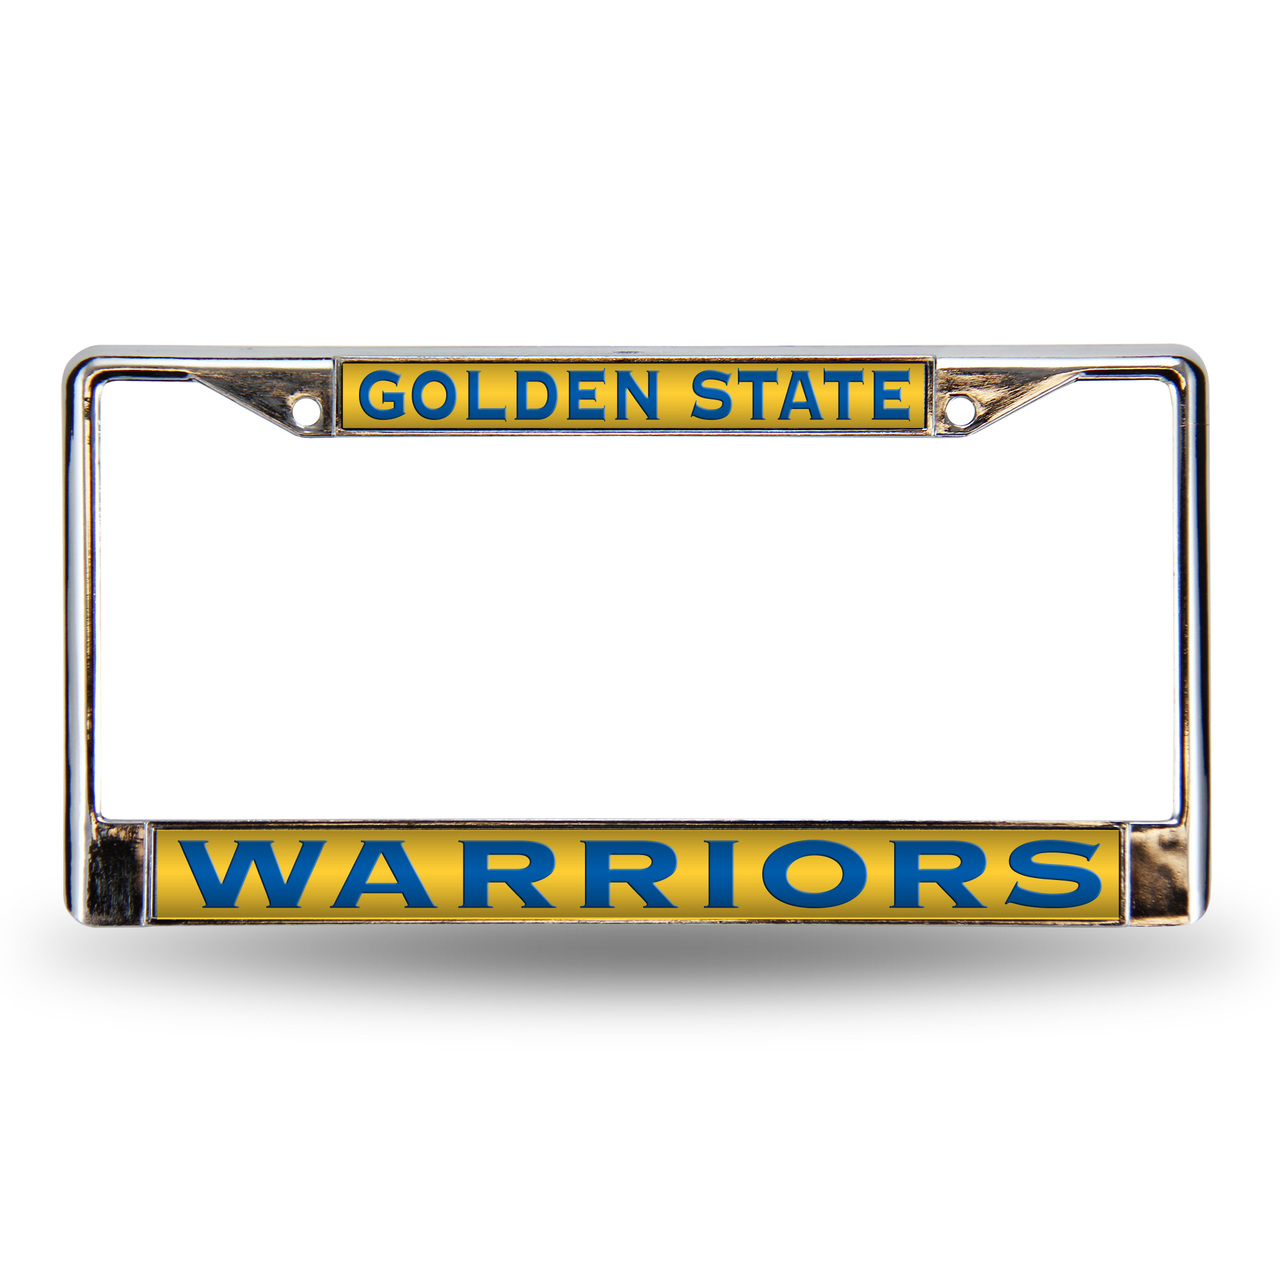 Golden State Warriors License Plate Frame Laser Cut Chrome - Special Order